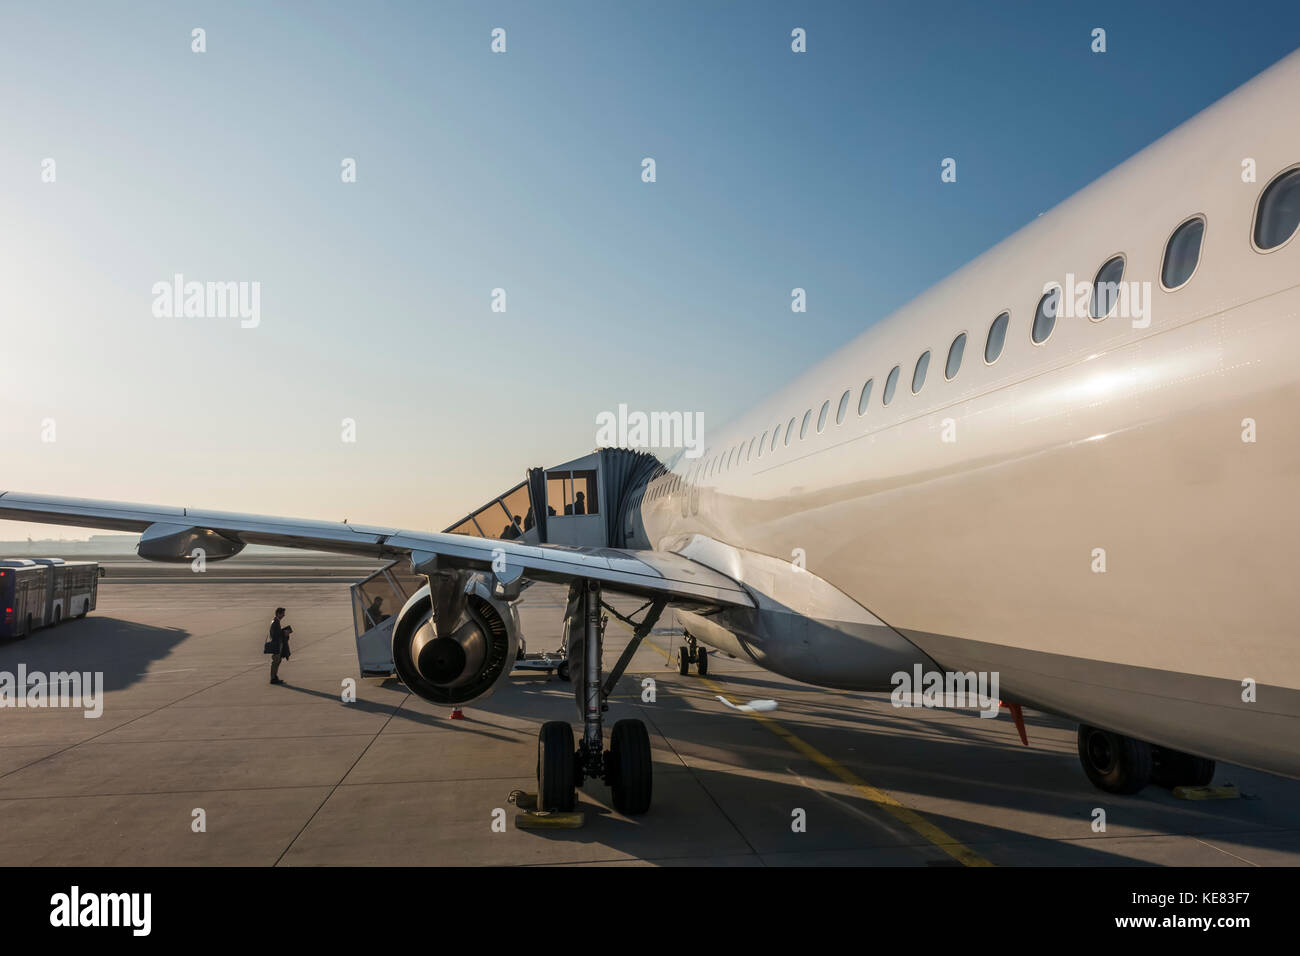 An Airplane Loading Passengers On The Tarmac At Frankfurt Airport; Frankfurt, Germany Stock Photo